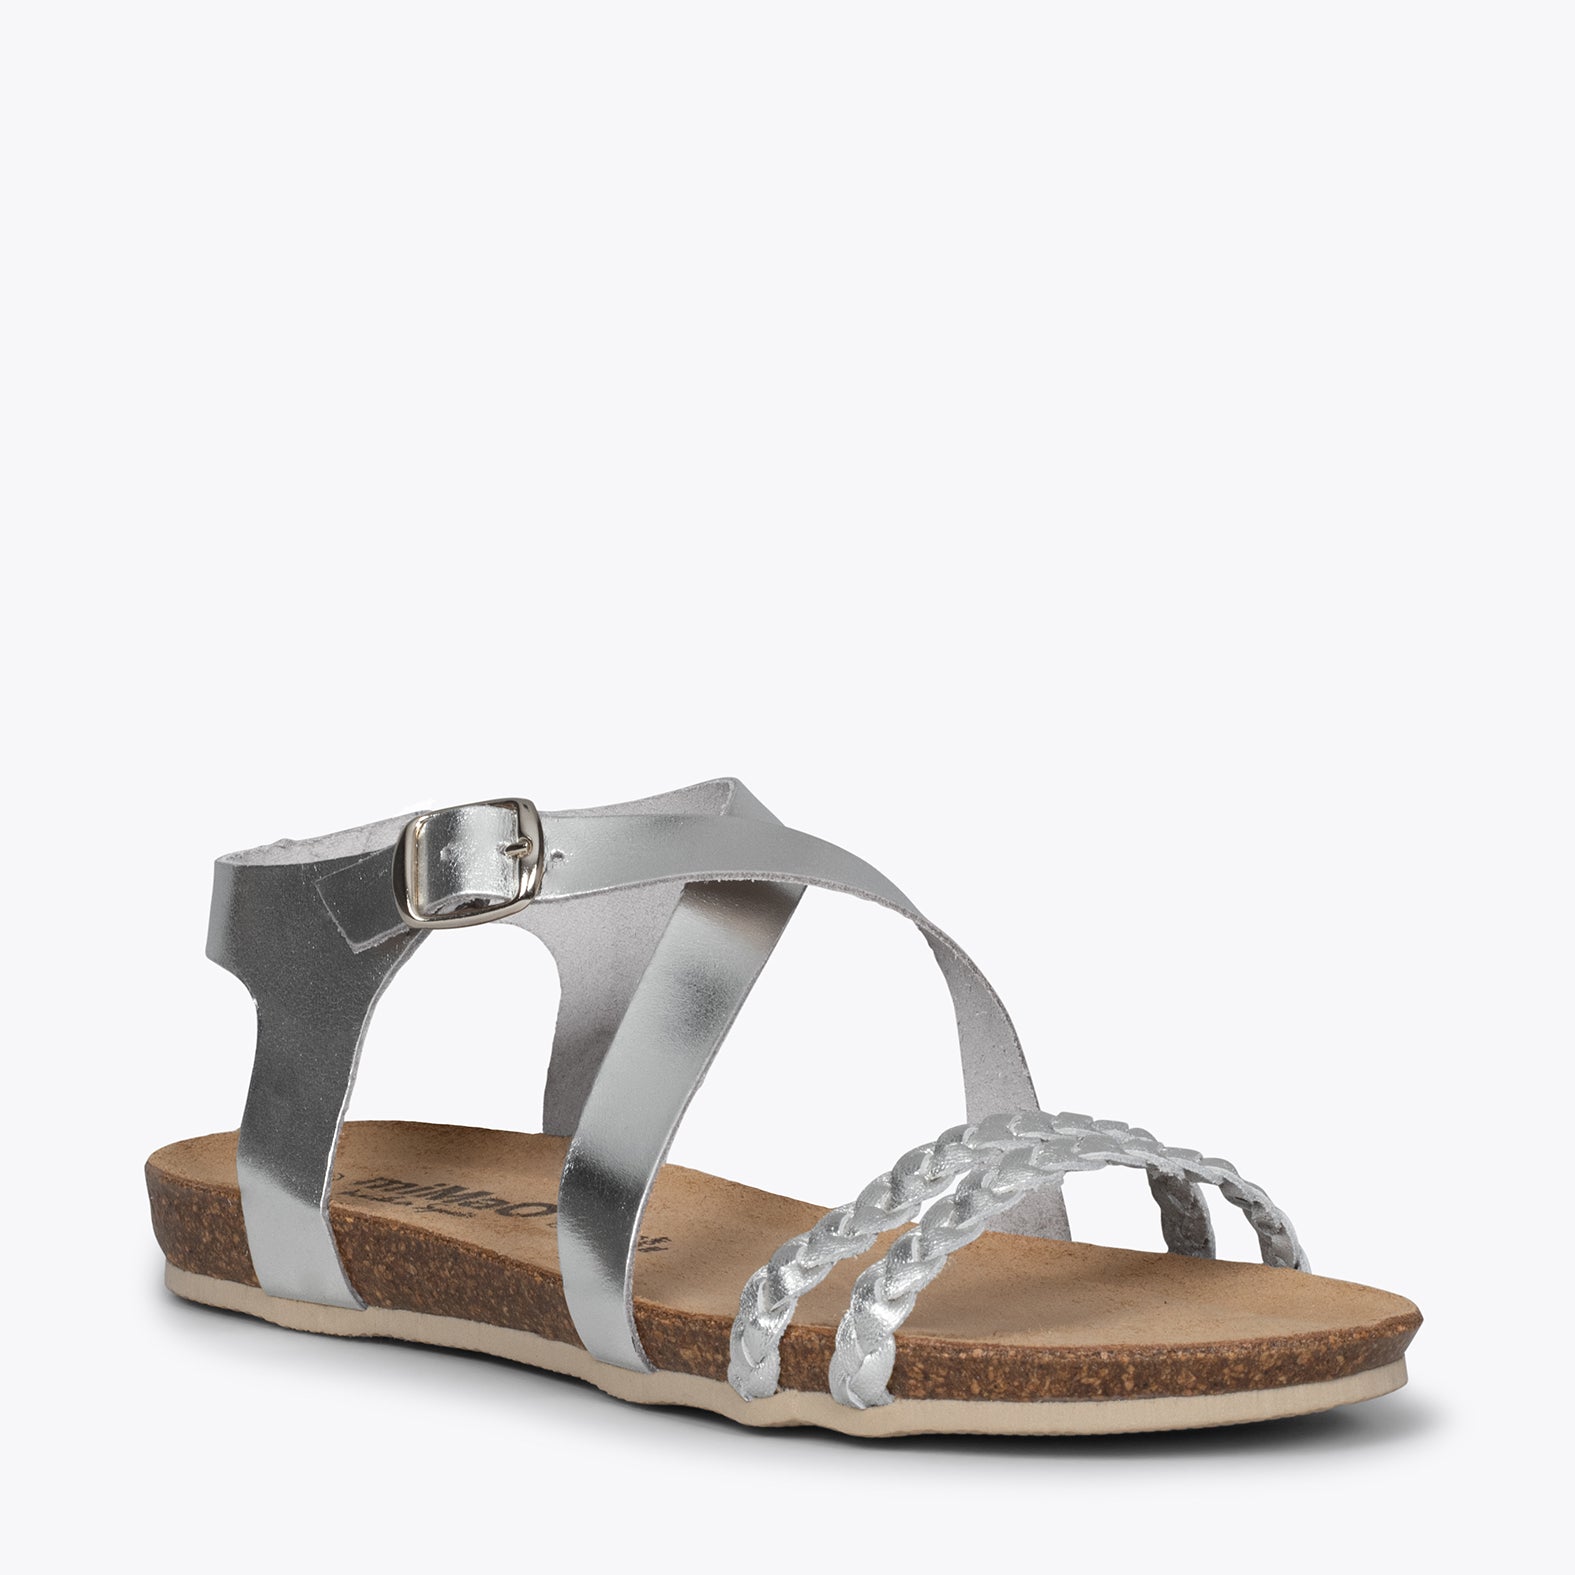 INDIE – SILVER BIO sandals with straps